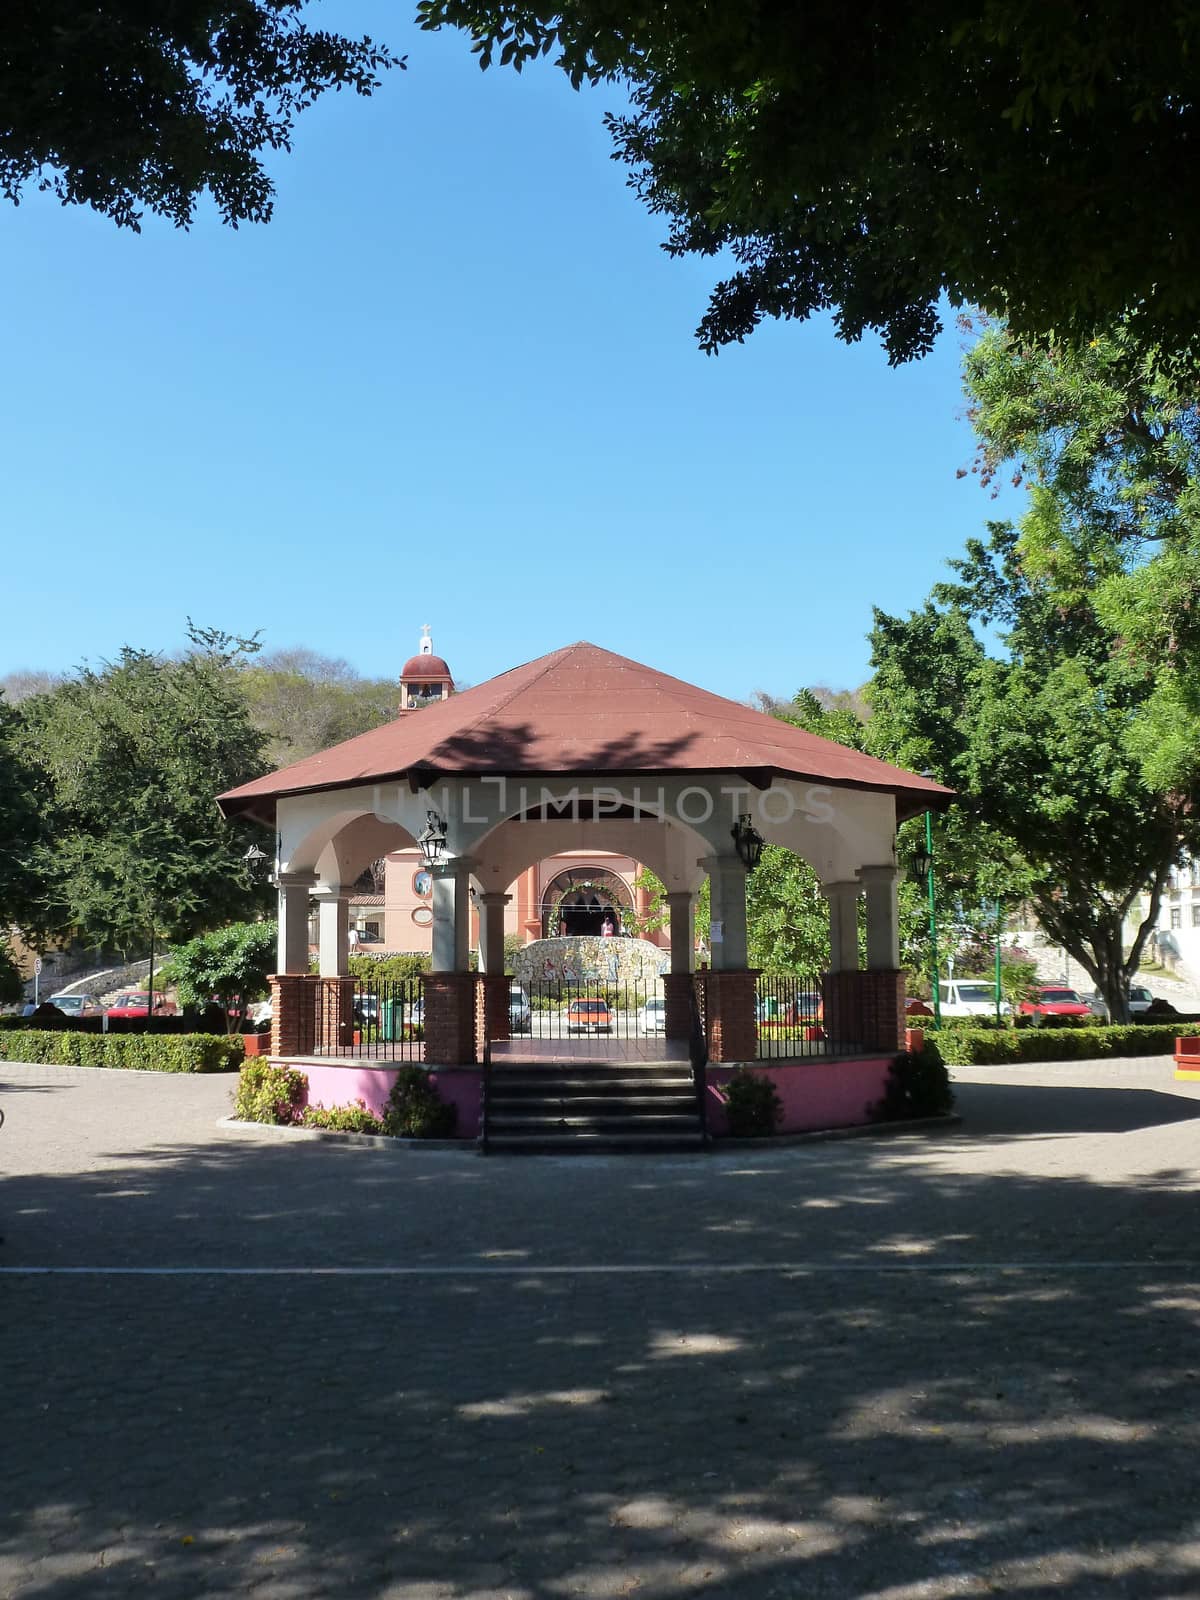 Huatulco bandstand by iwfrazer